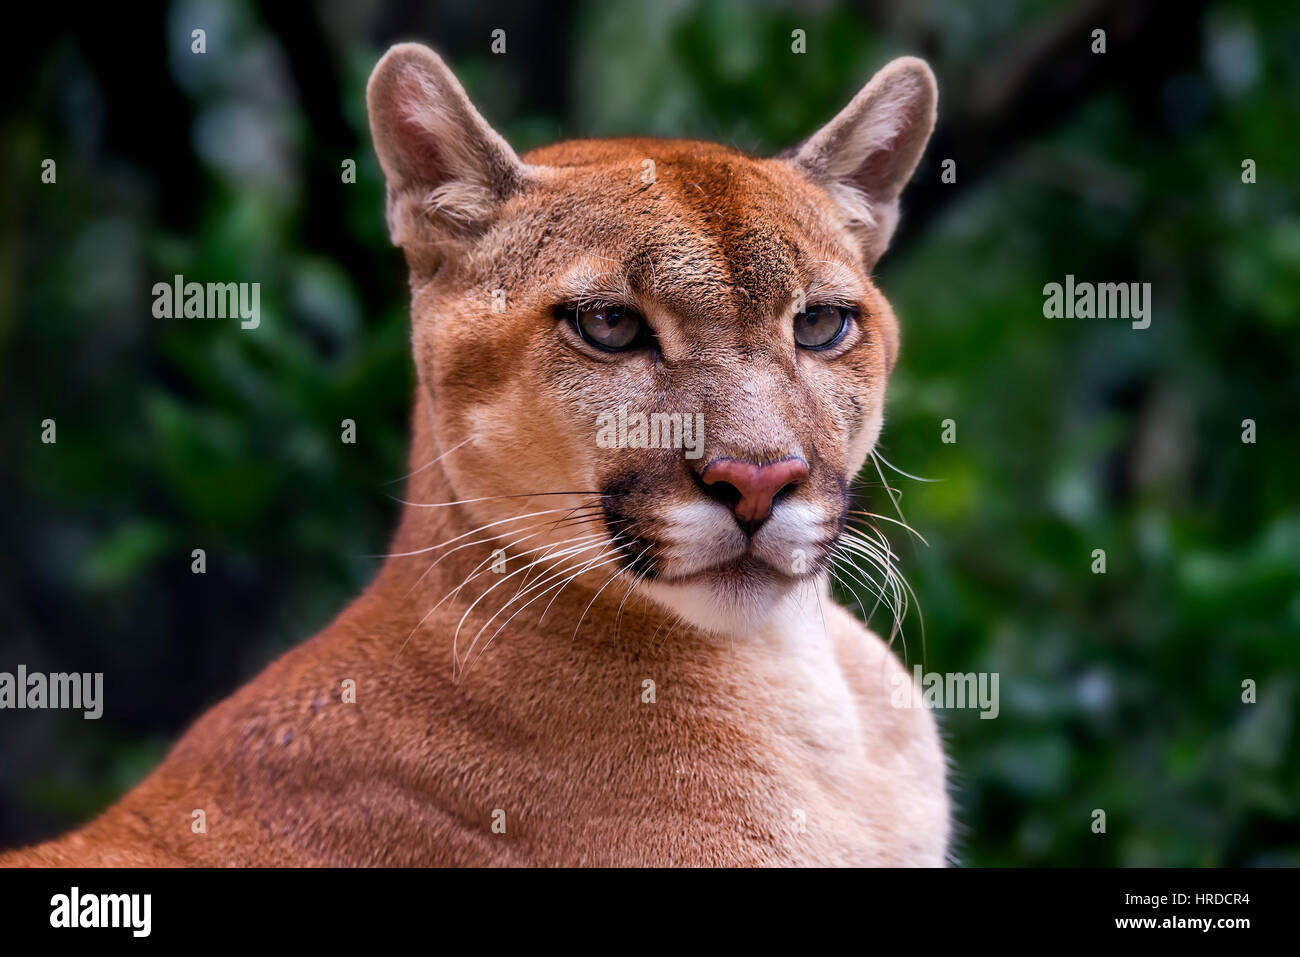 Cougar (Puma Concolor), in Goiais - Brasilien fotografiert. Cerrado Biom.  Gefangene Tier Stockfotografie - Alamy